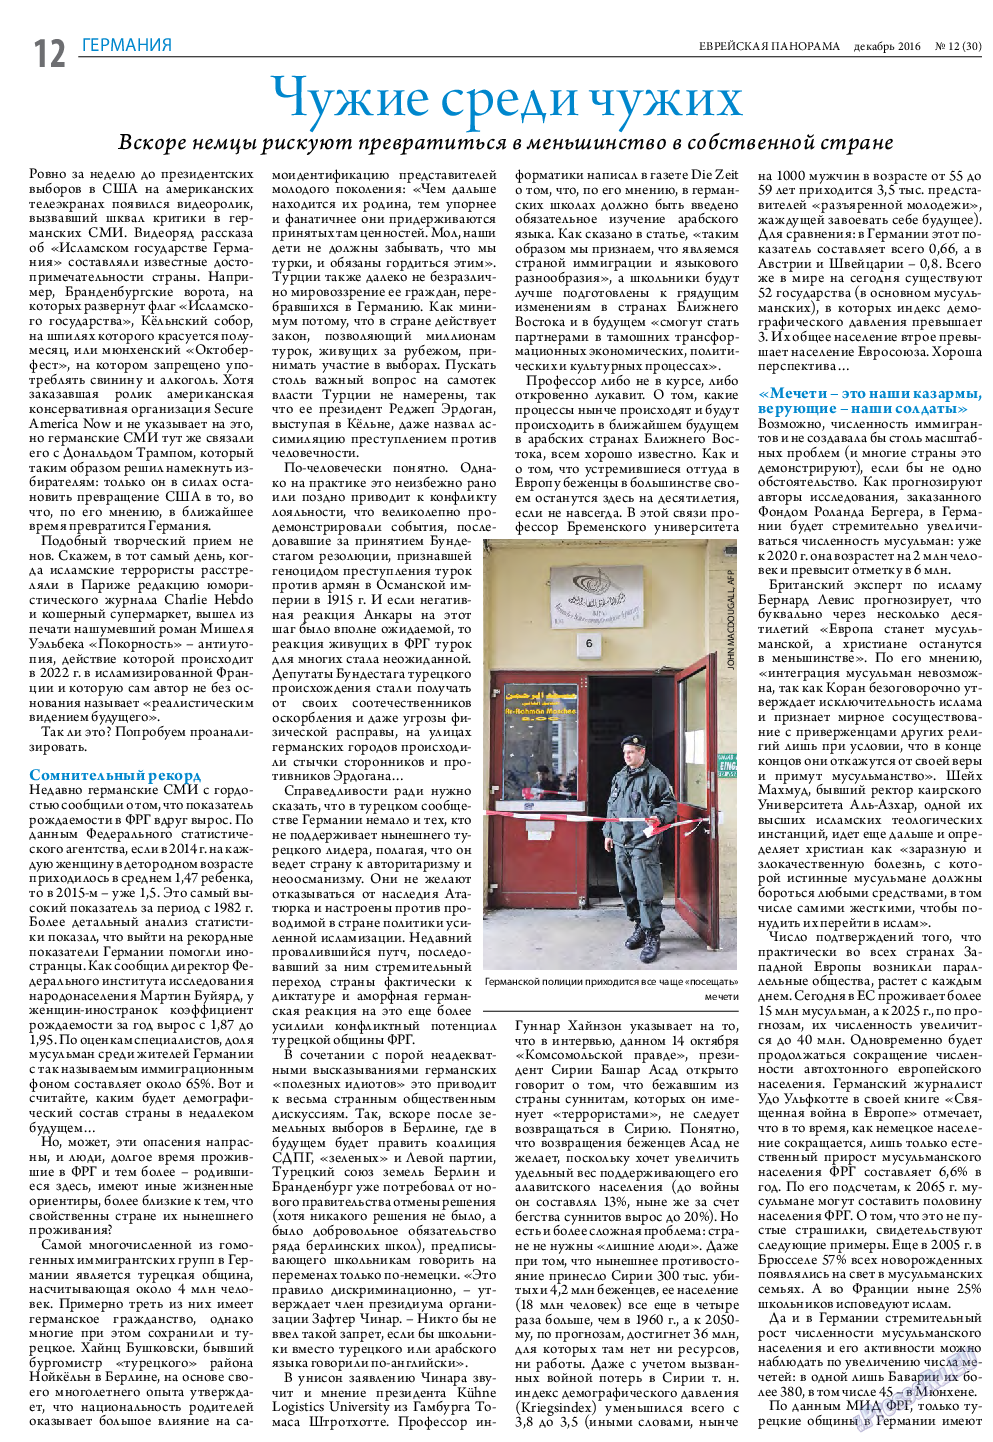 Еврейская панорама, газета. 2016 №12 стр.12